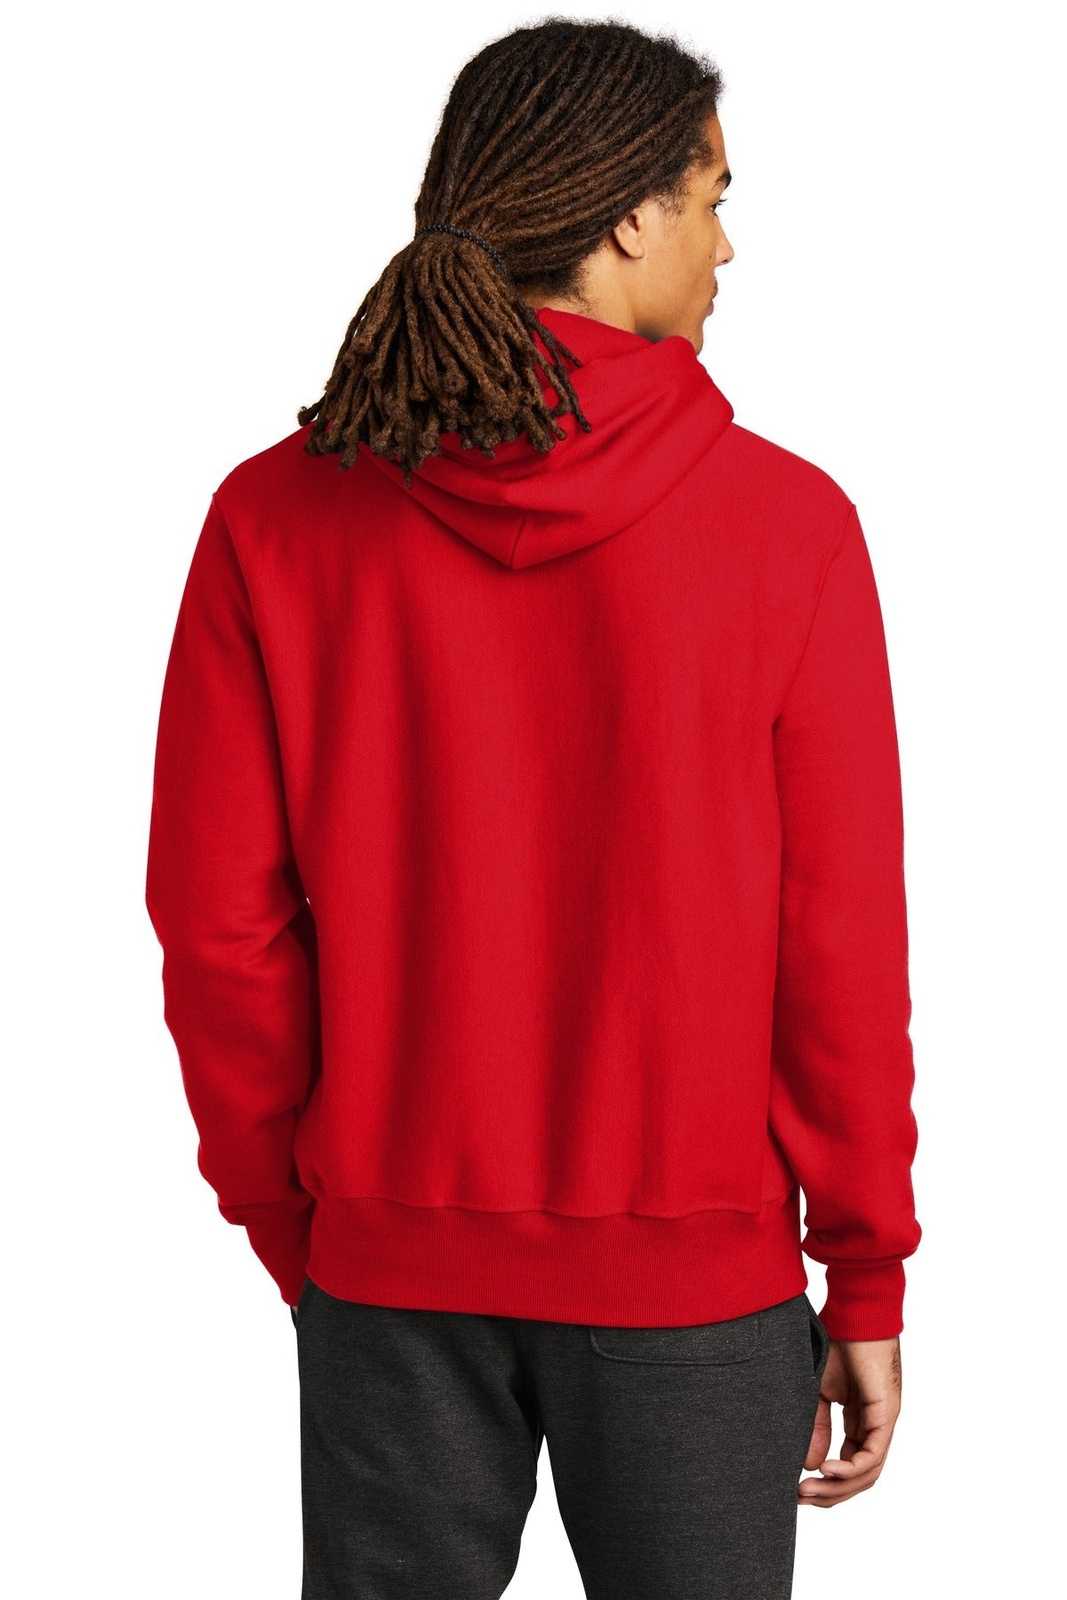 Champion S101 Reverse Weave Hooded Sweatshirt - Red